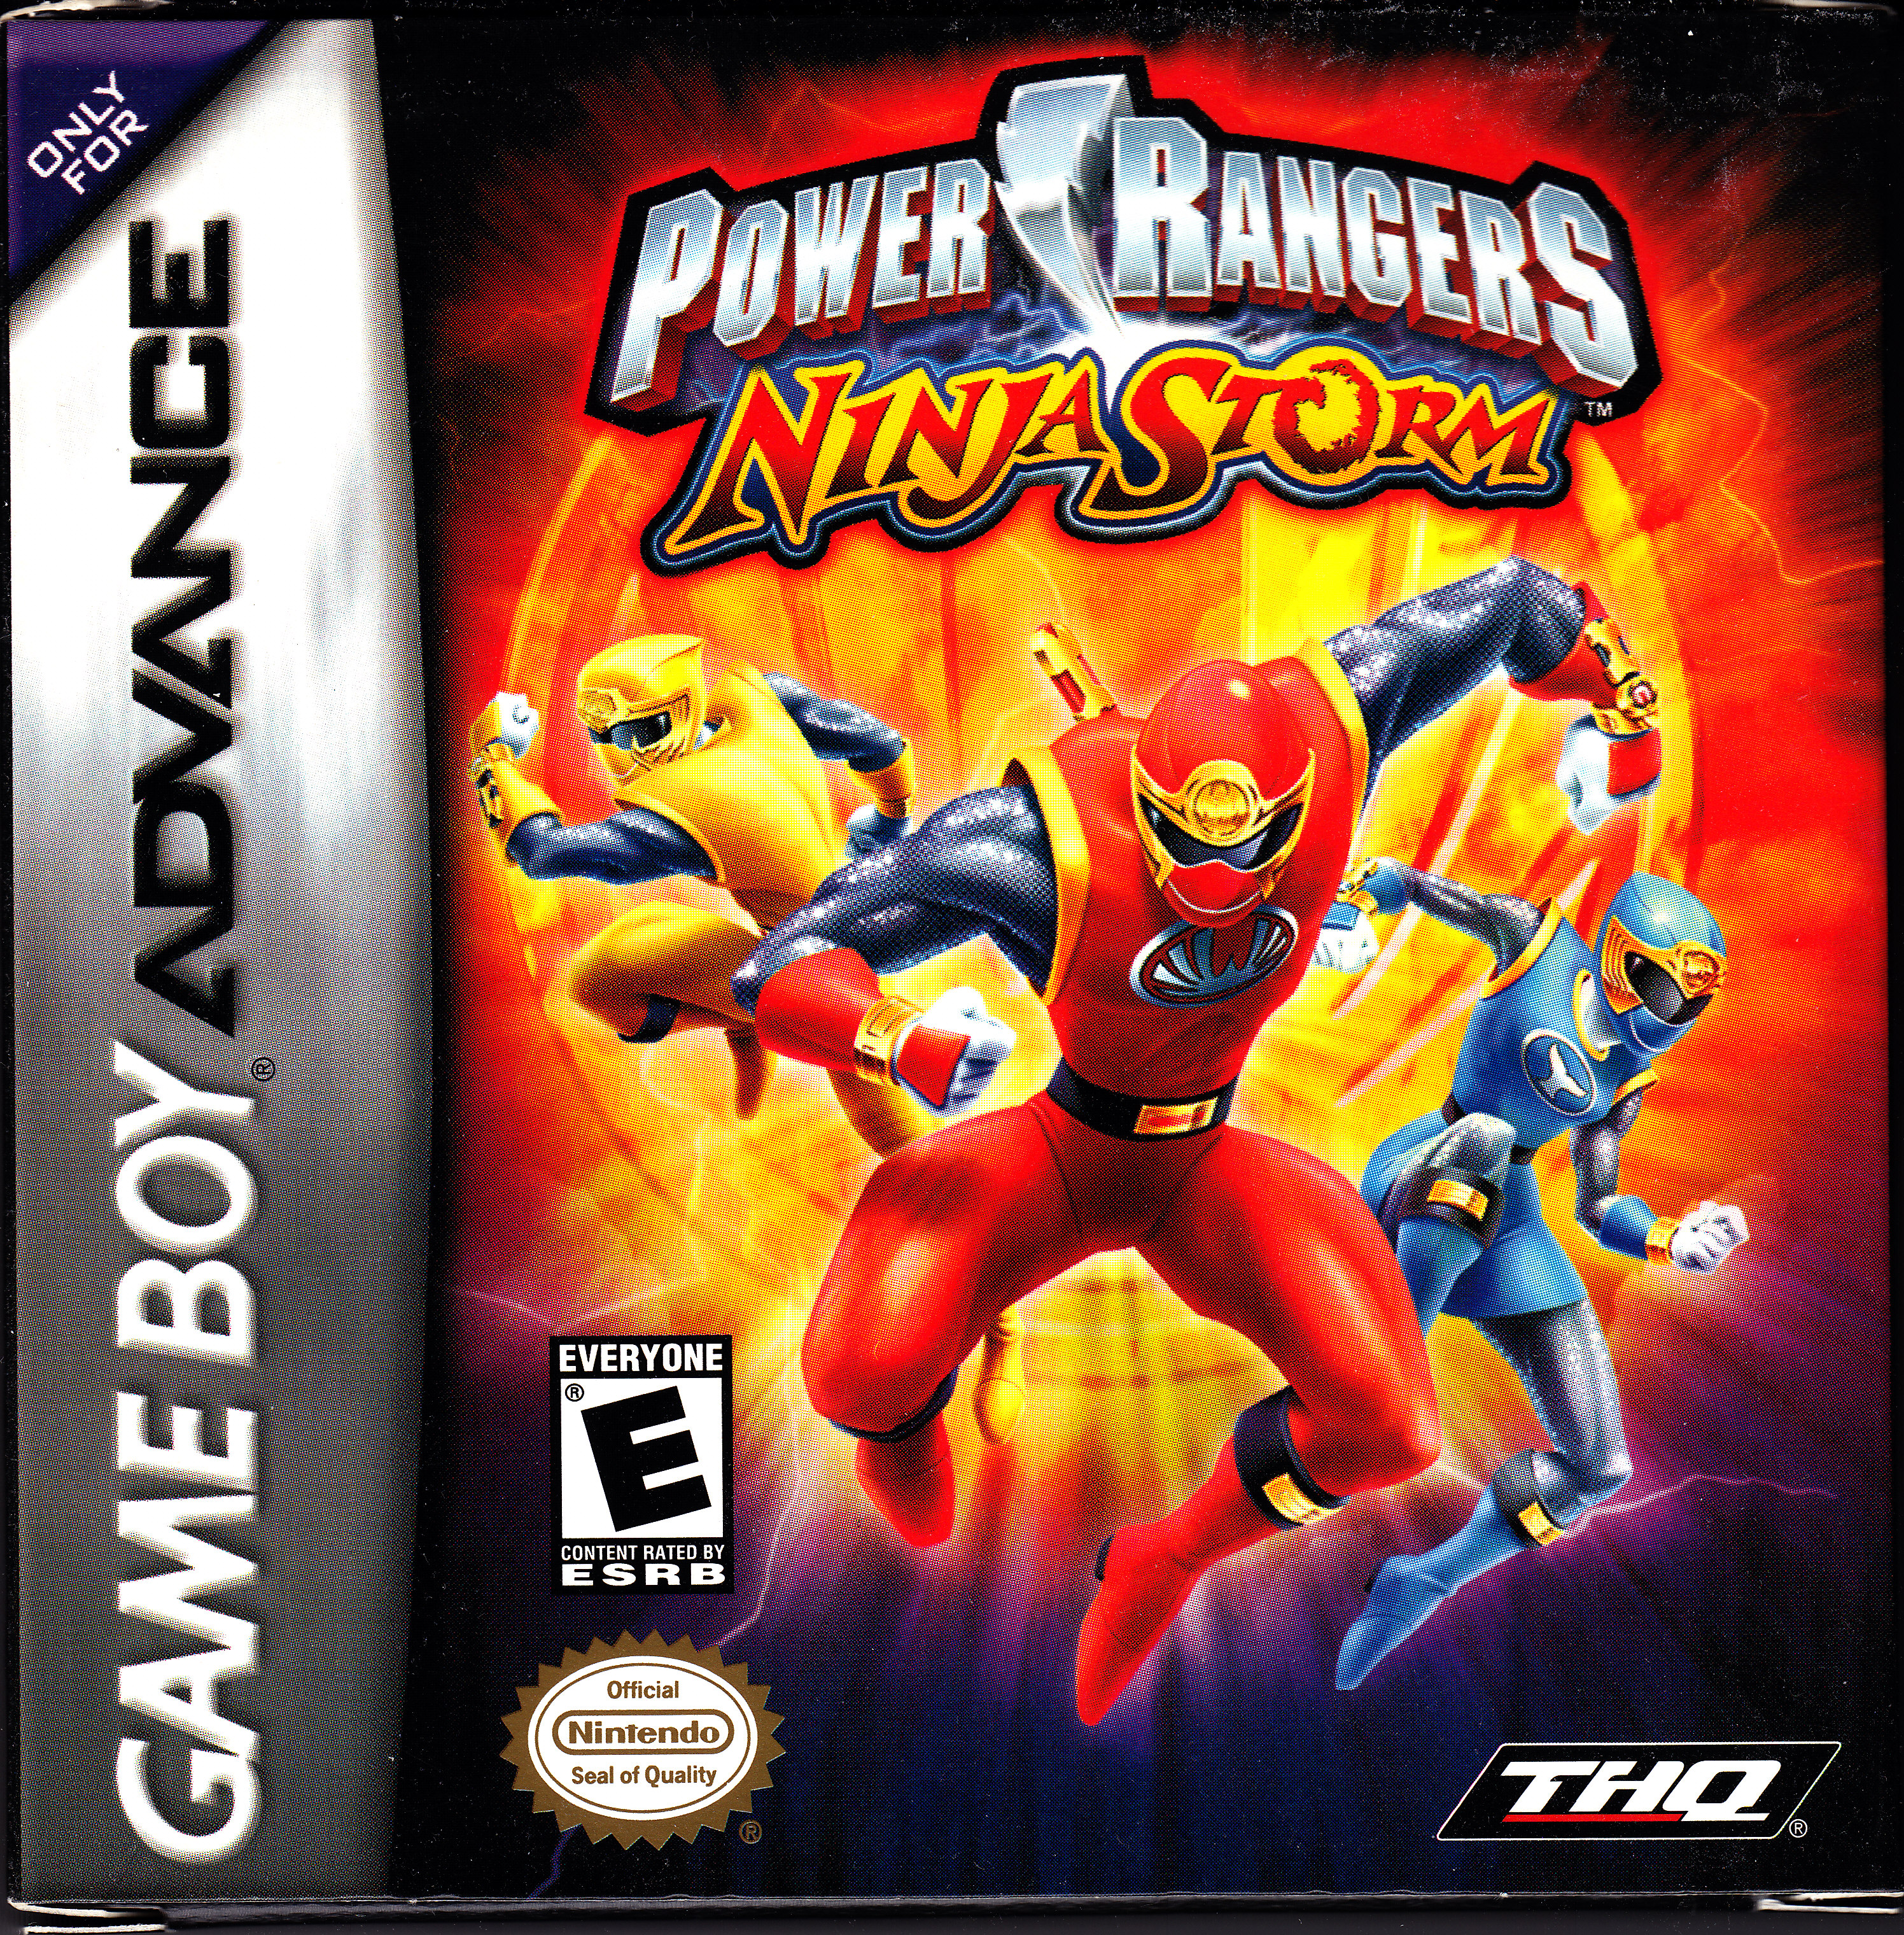 Gba roms rus. Power Rangers игра GBA. Power Rangers Ninja Storm игра. Могучие рейнджеры на геймбой. Power Rangers Ninja Storm GBA.